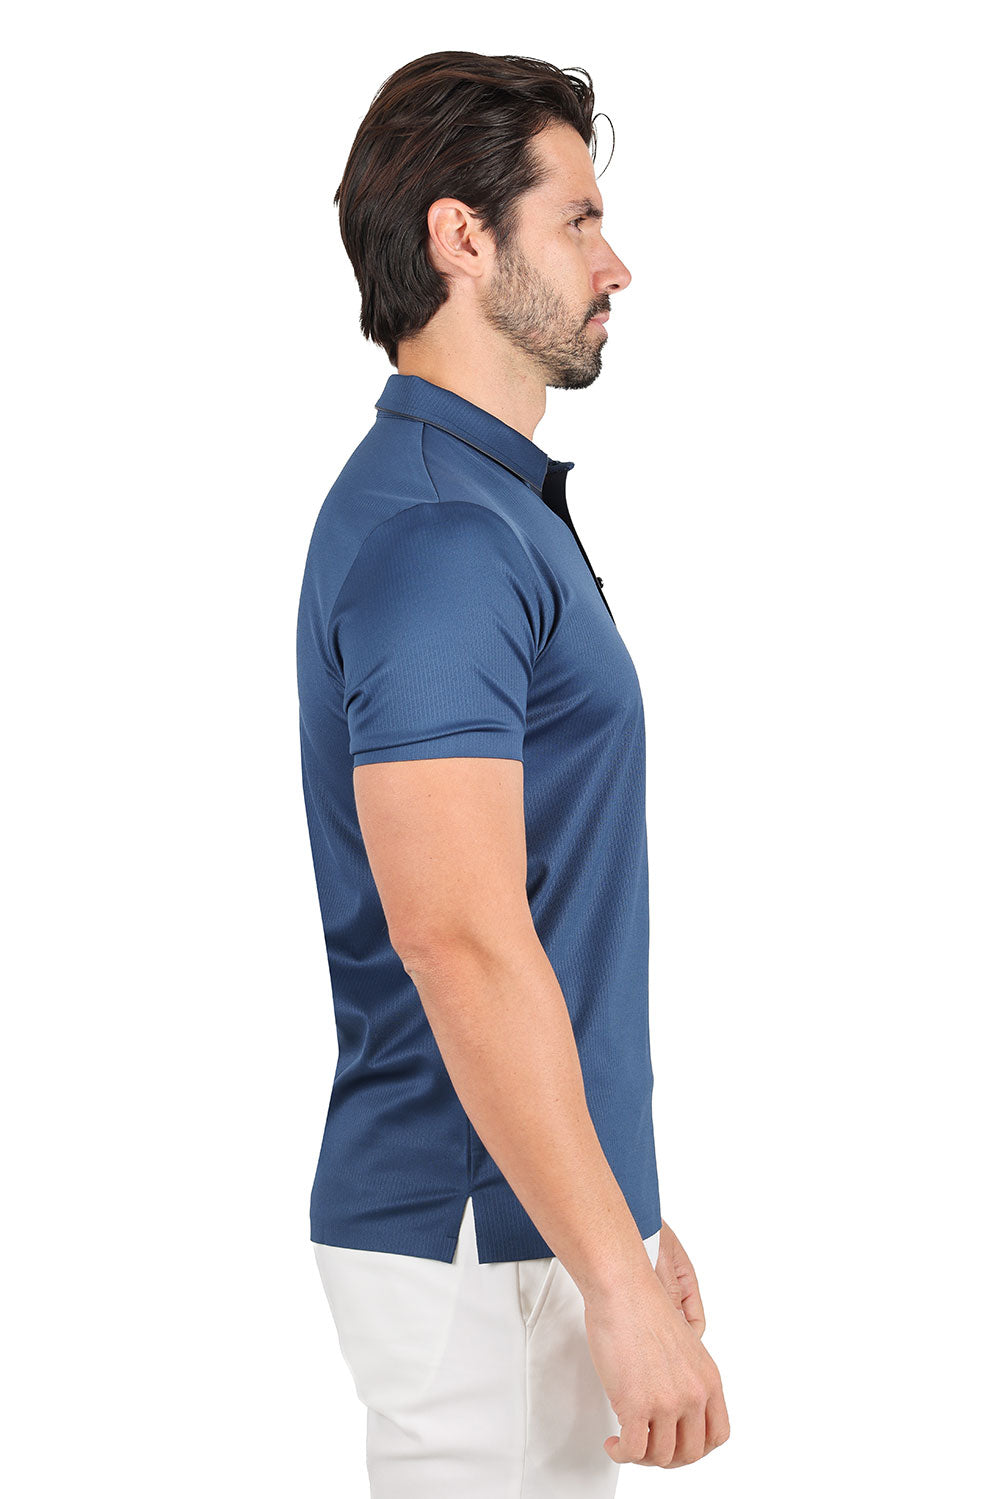 Barabas Men's Soft Silky Cotton Blend Short Sleeve Polo Shirt 2PP829 Blue Teal